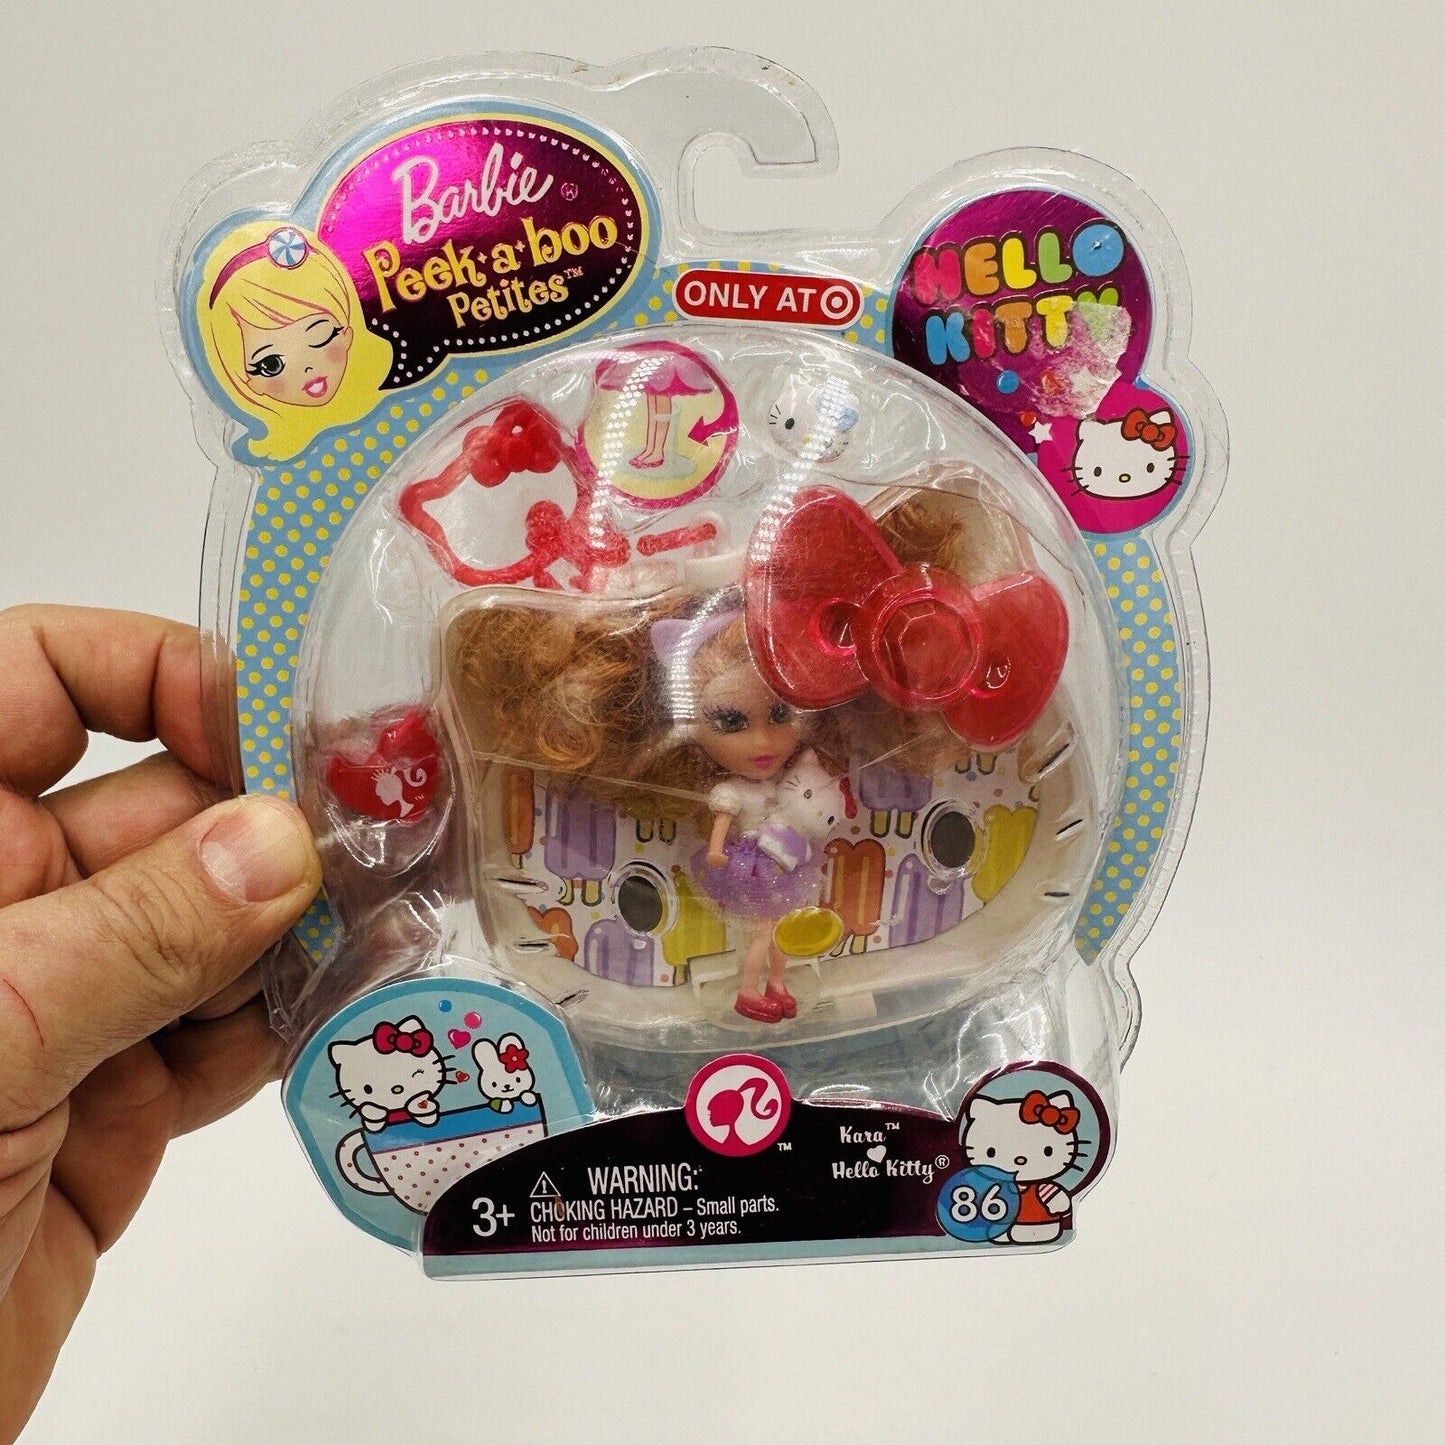 Barbie Peek A Boo Petites Hello Kitty Kara And Hello Kitty #86 Sealed 2008